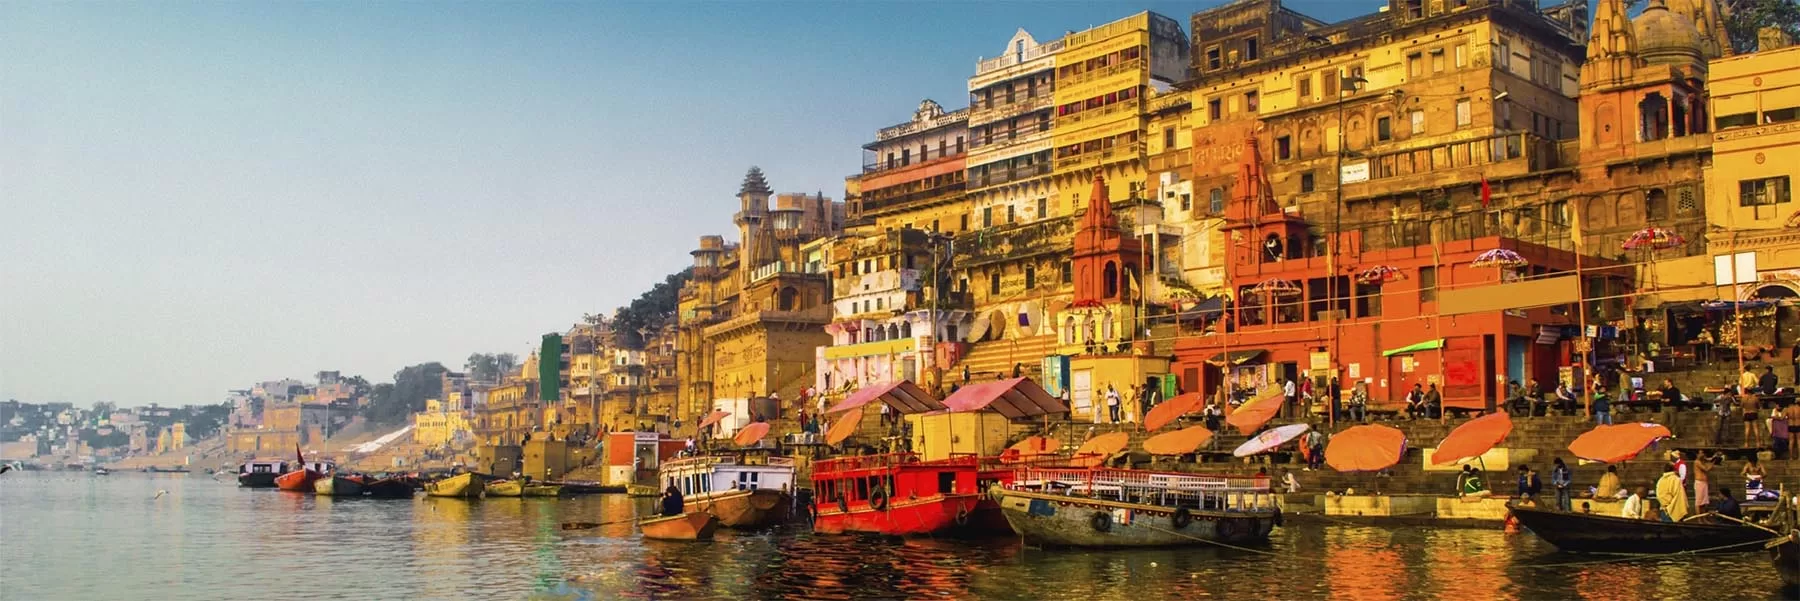 Top 10 things to do in Varanasi